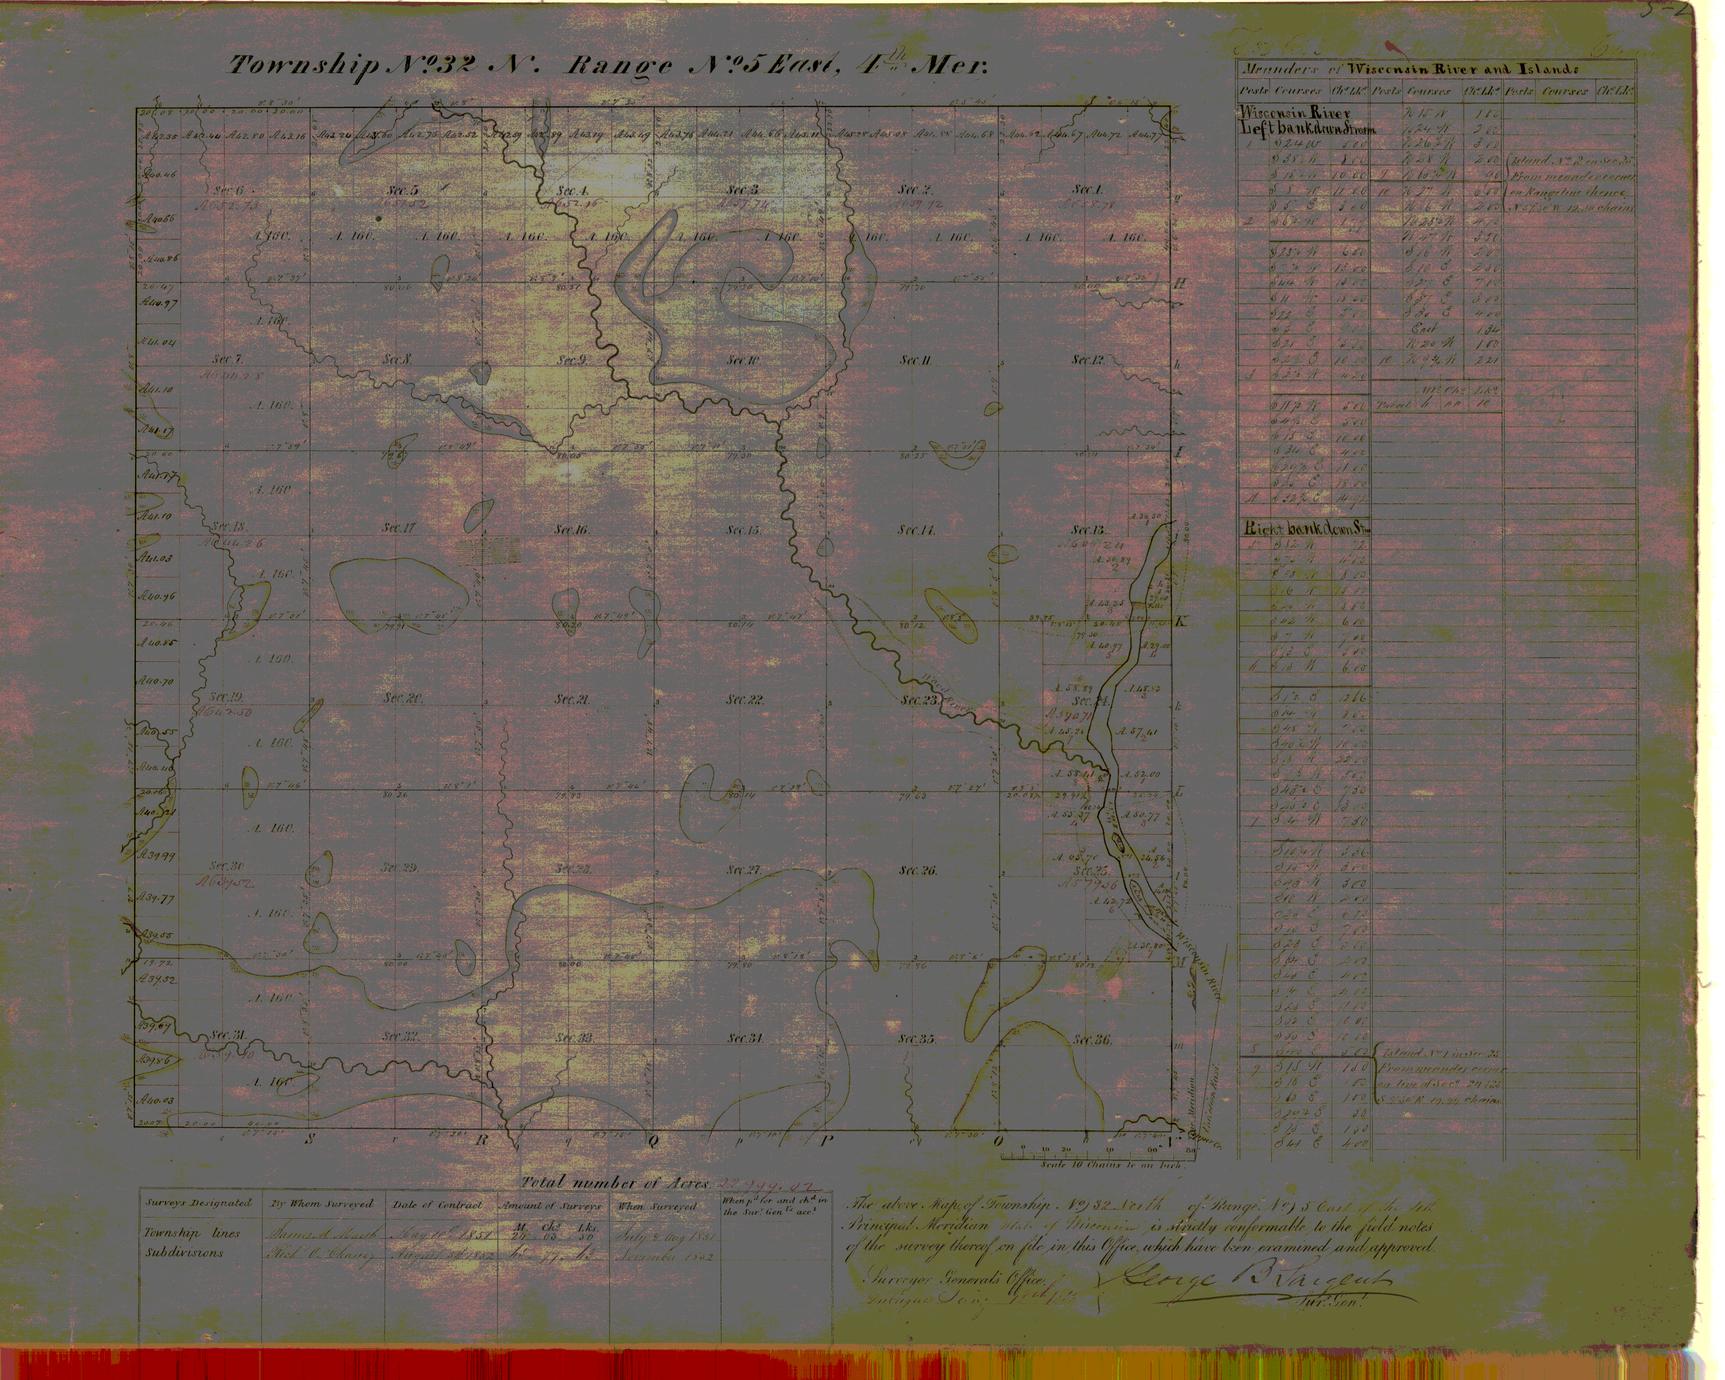 [Public Land Survey System map: Wisconsin Township 32 North, Range 05 East]